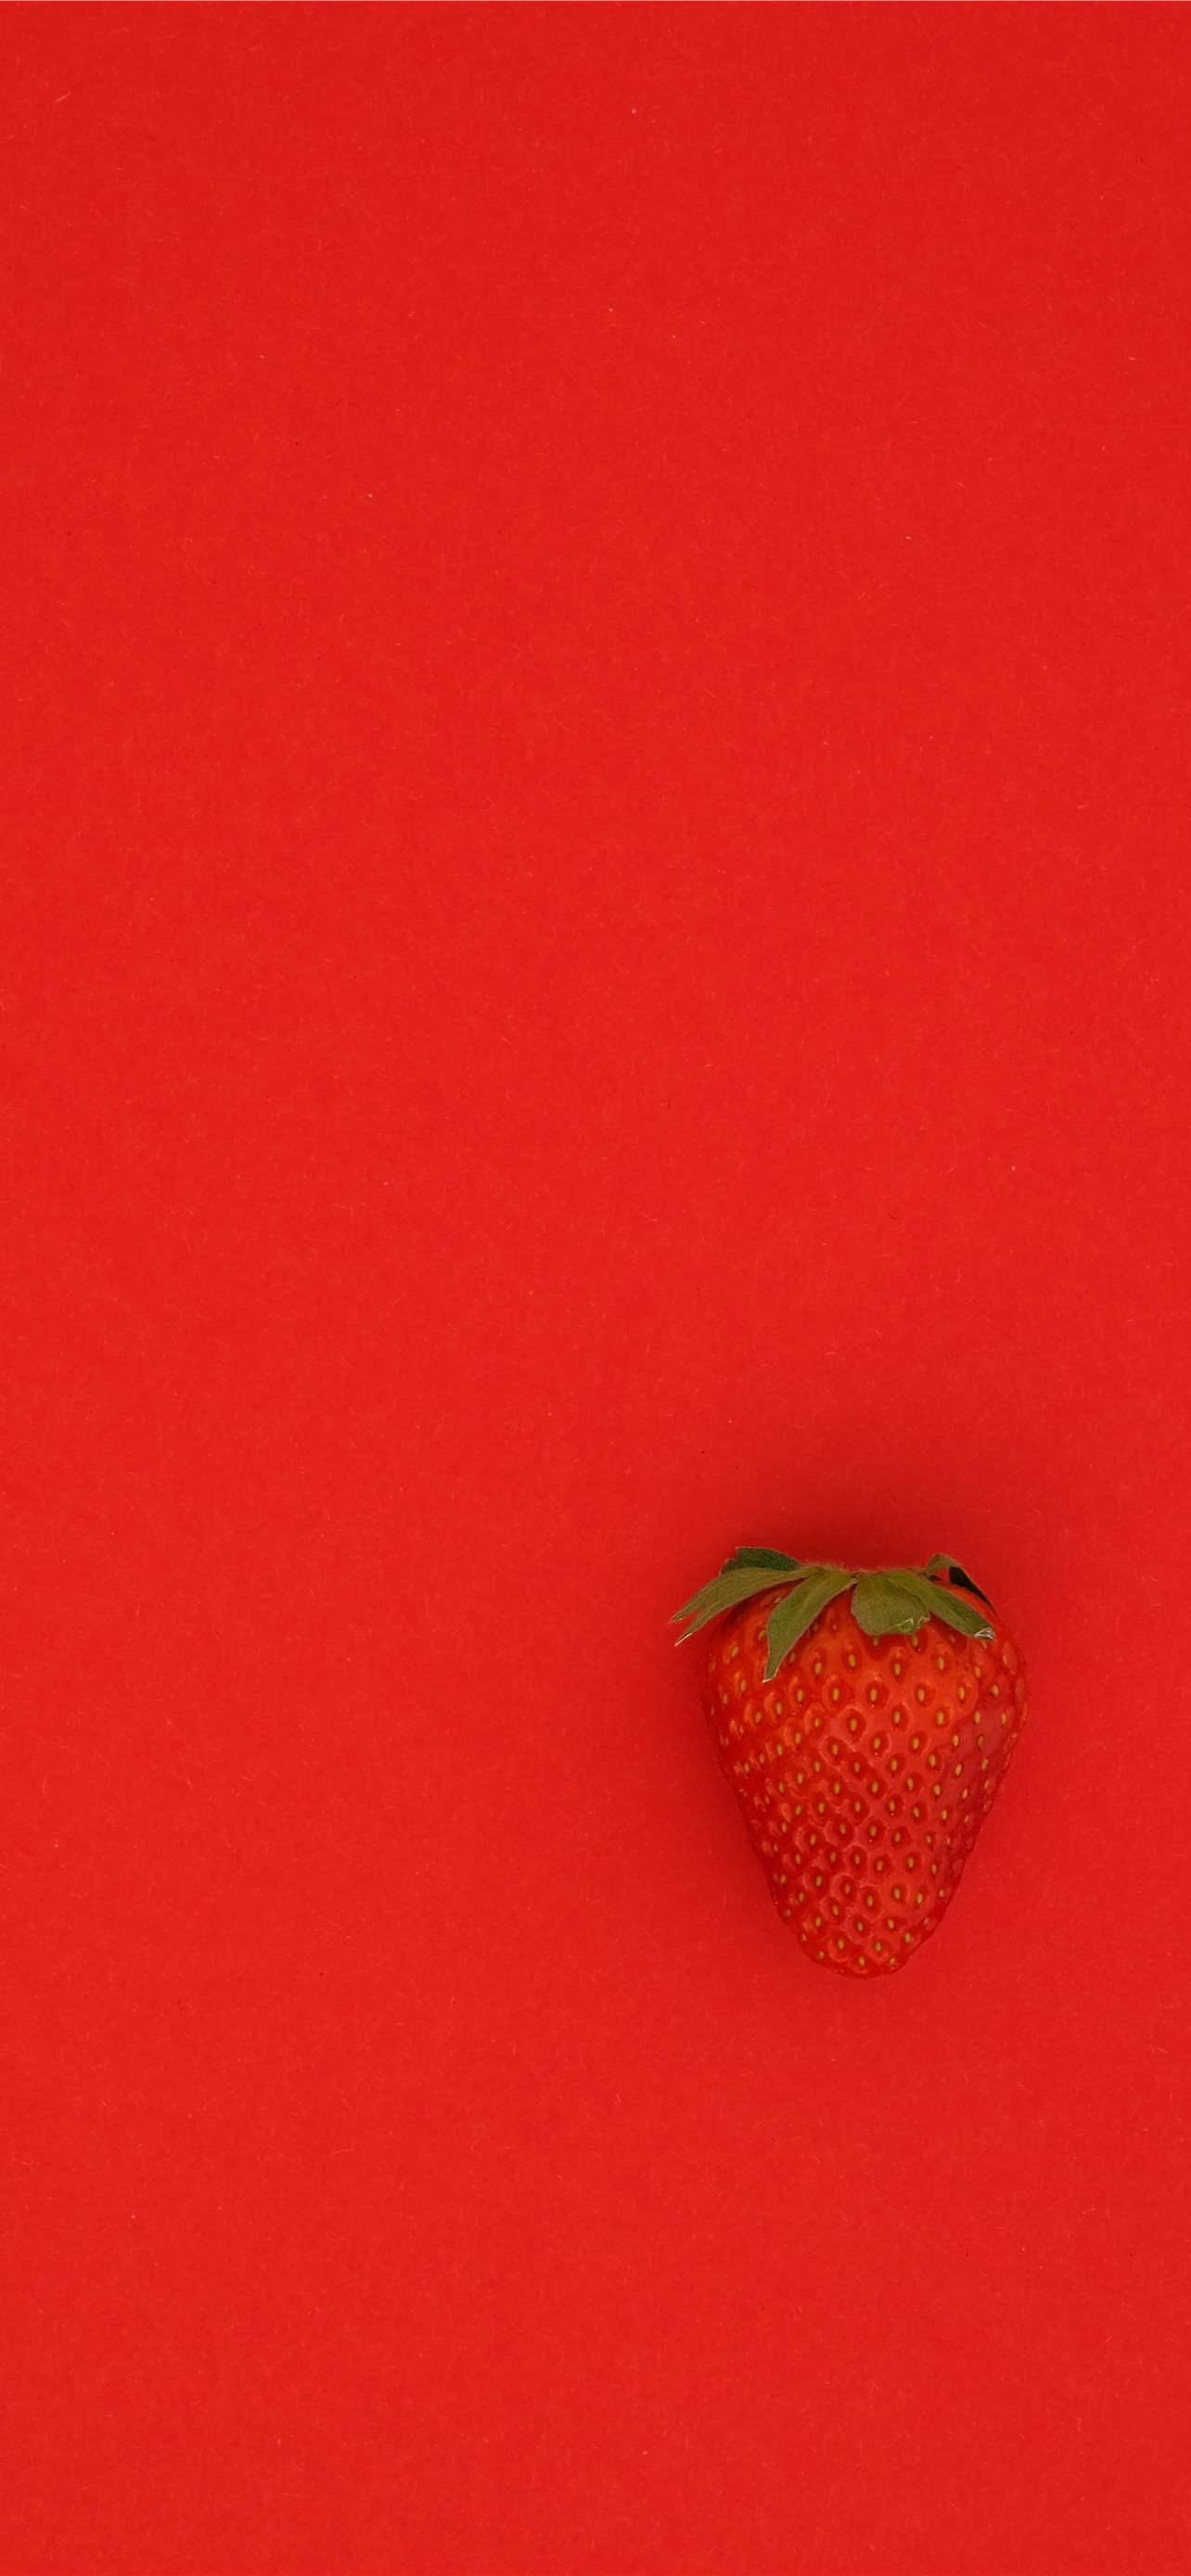 Strawberry Iphone Wallpaper on Behance